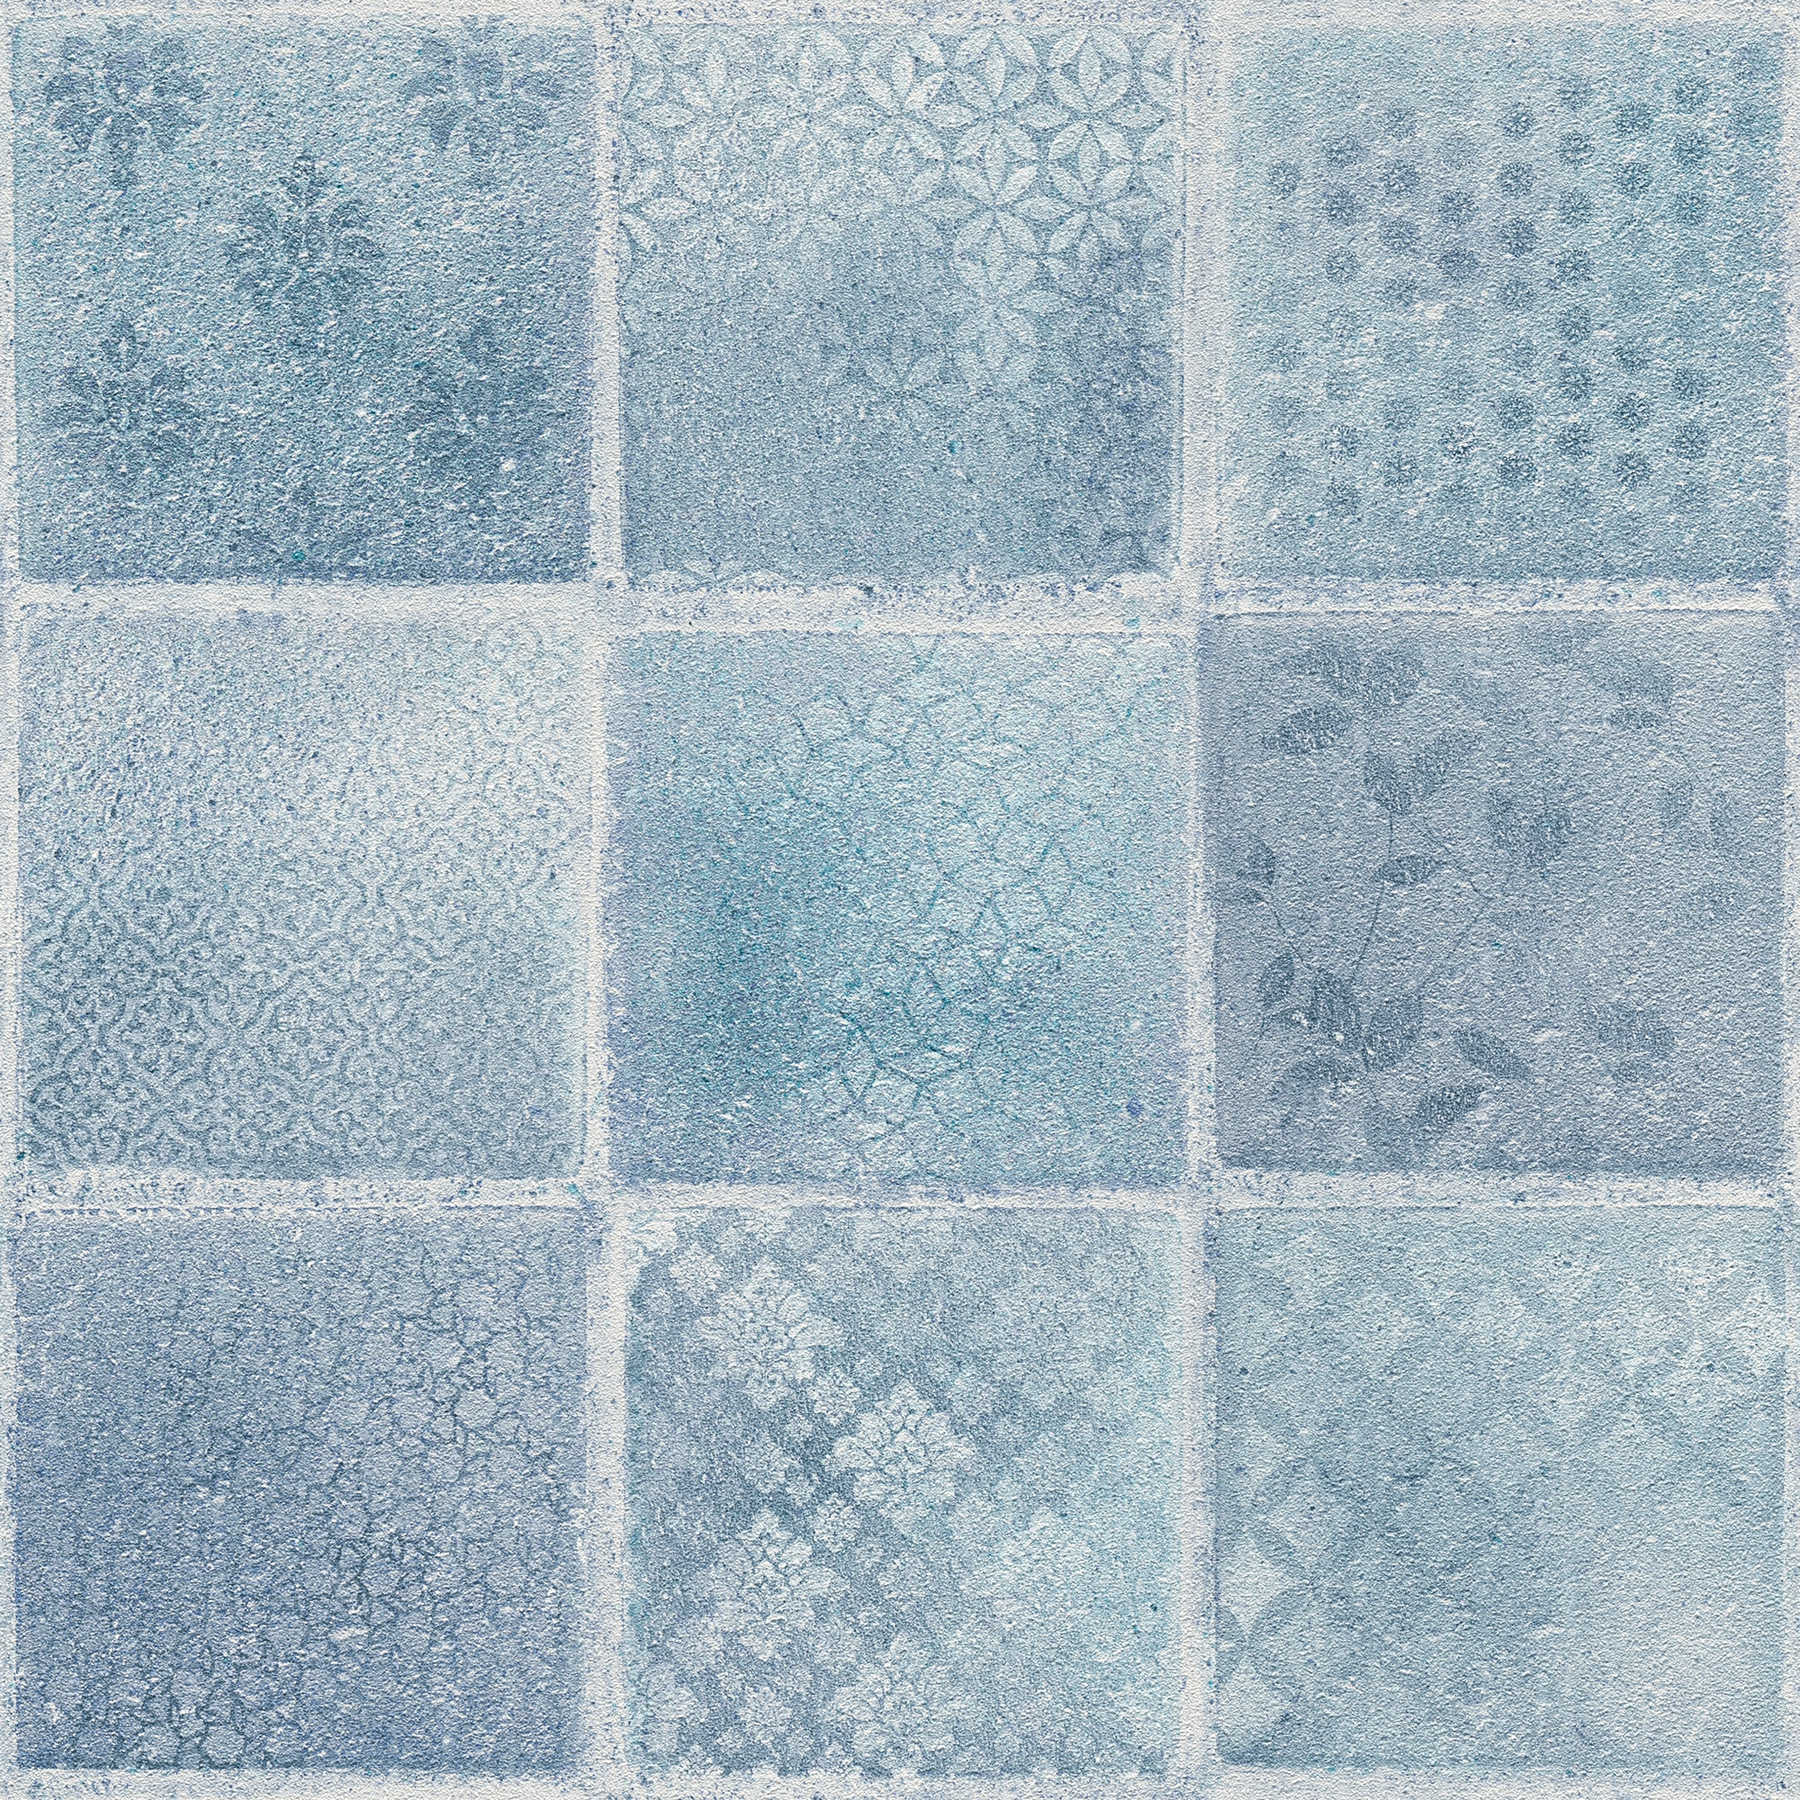         Tapete in Mosaik- und Fliesenoptik – Blau, Grau, Creme
    